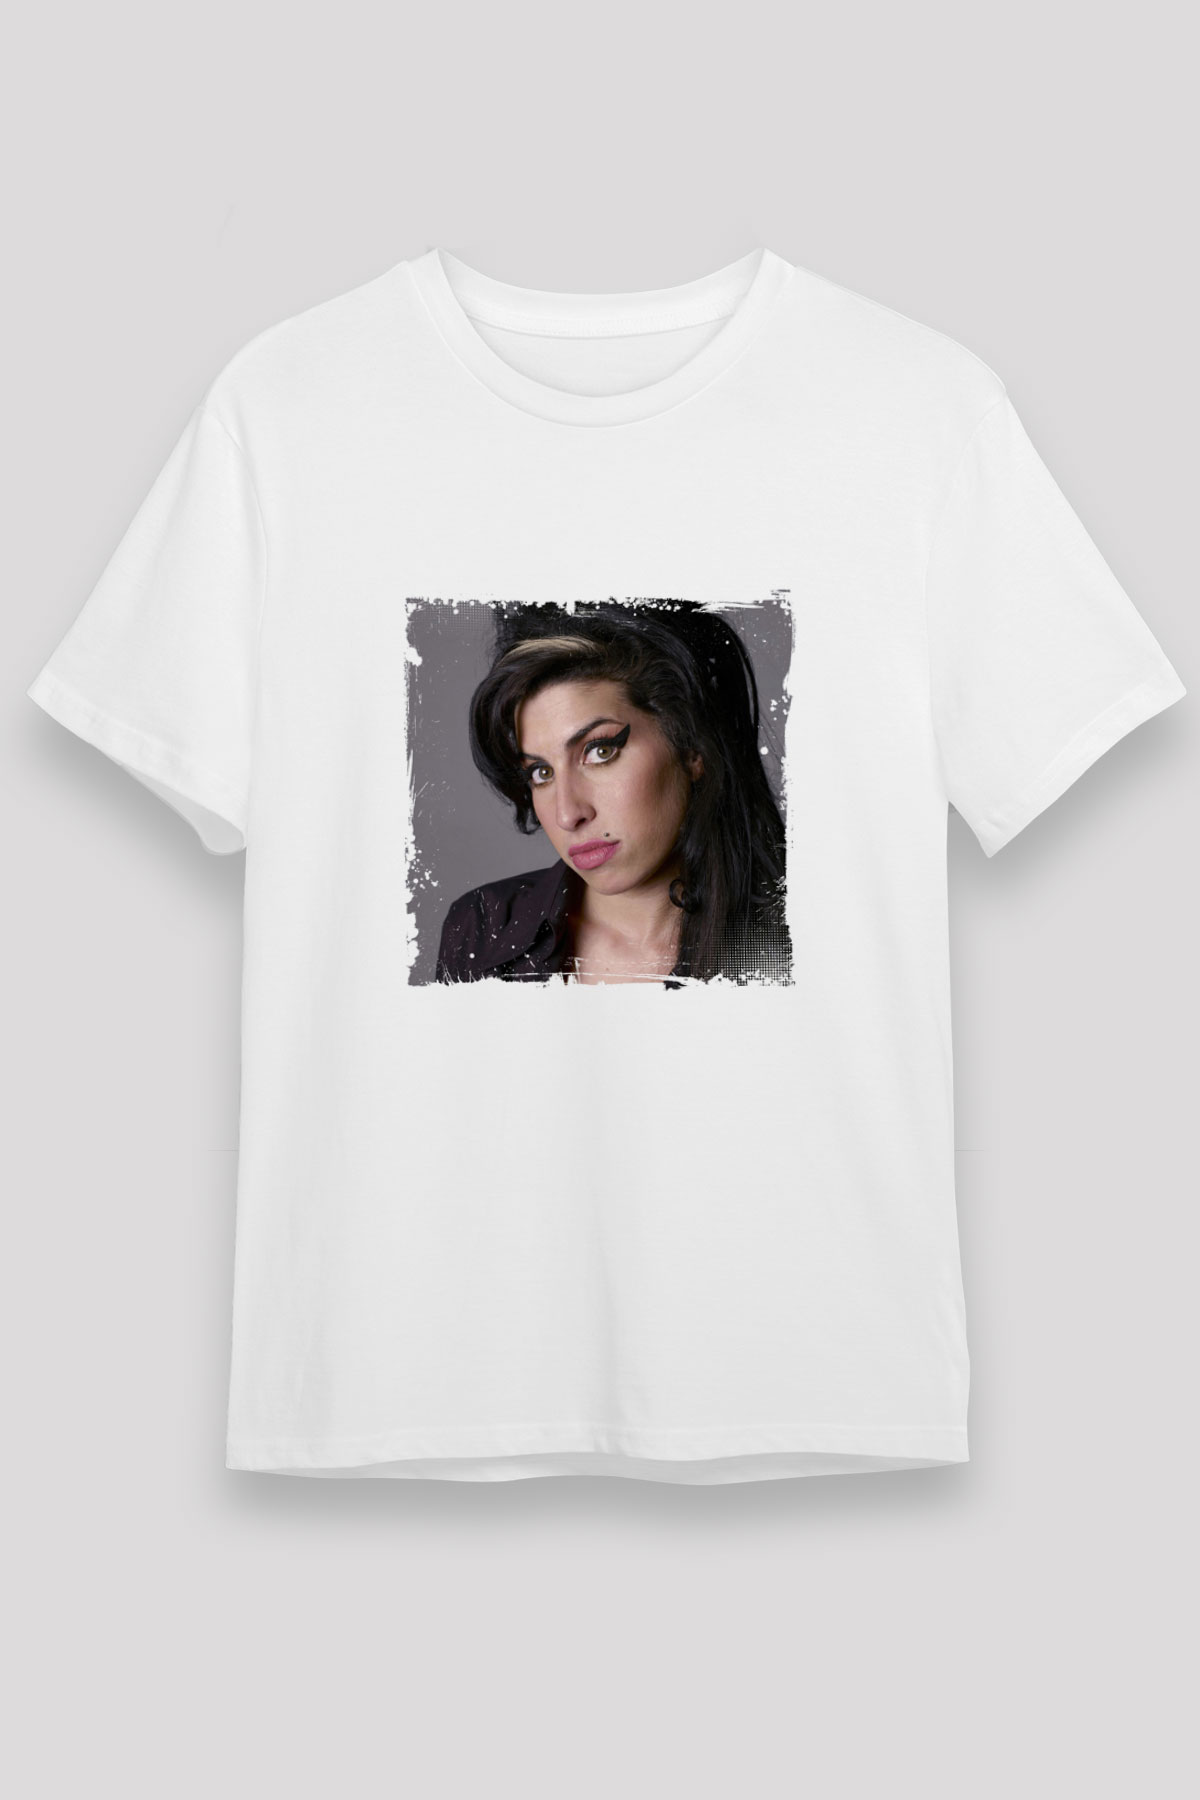 Amy Winehouse T shirt,Music Tshirt 05/